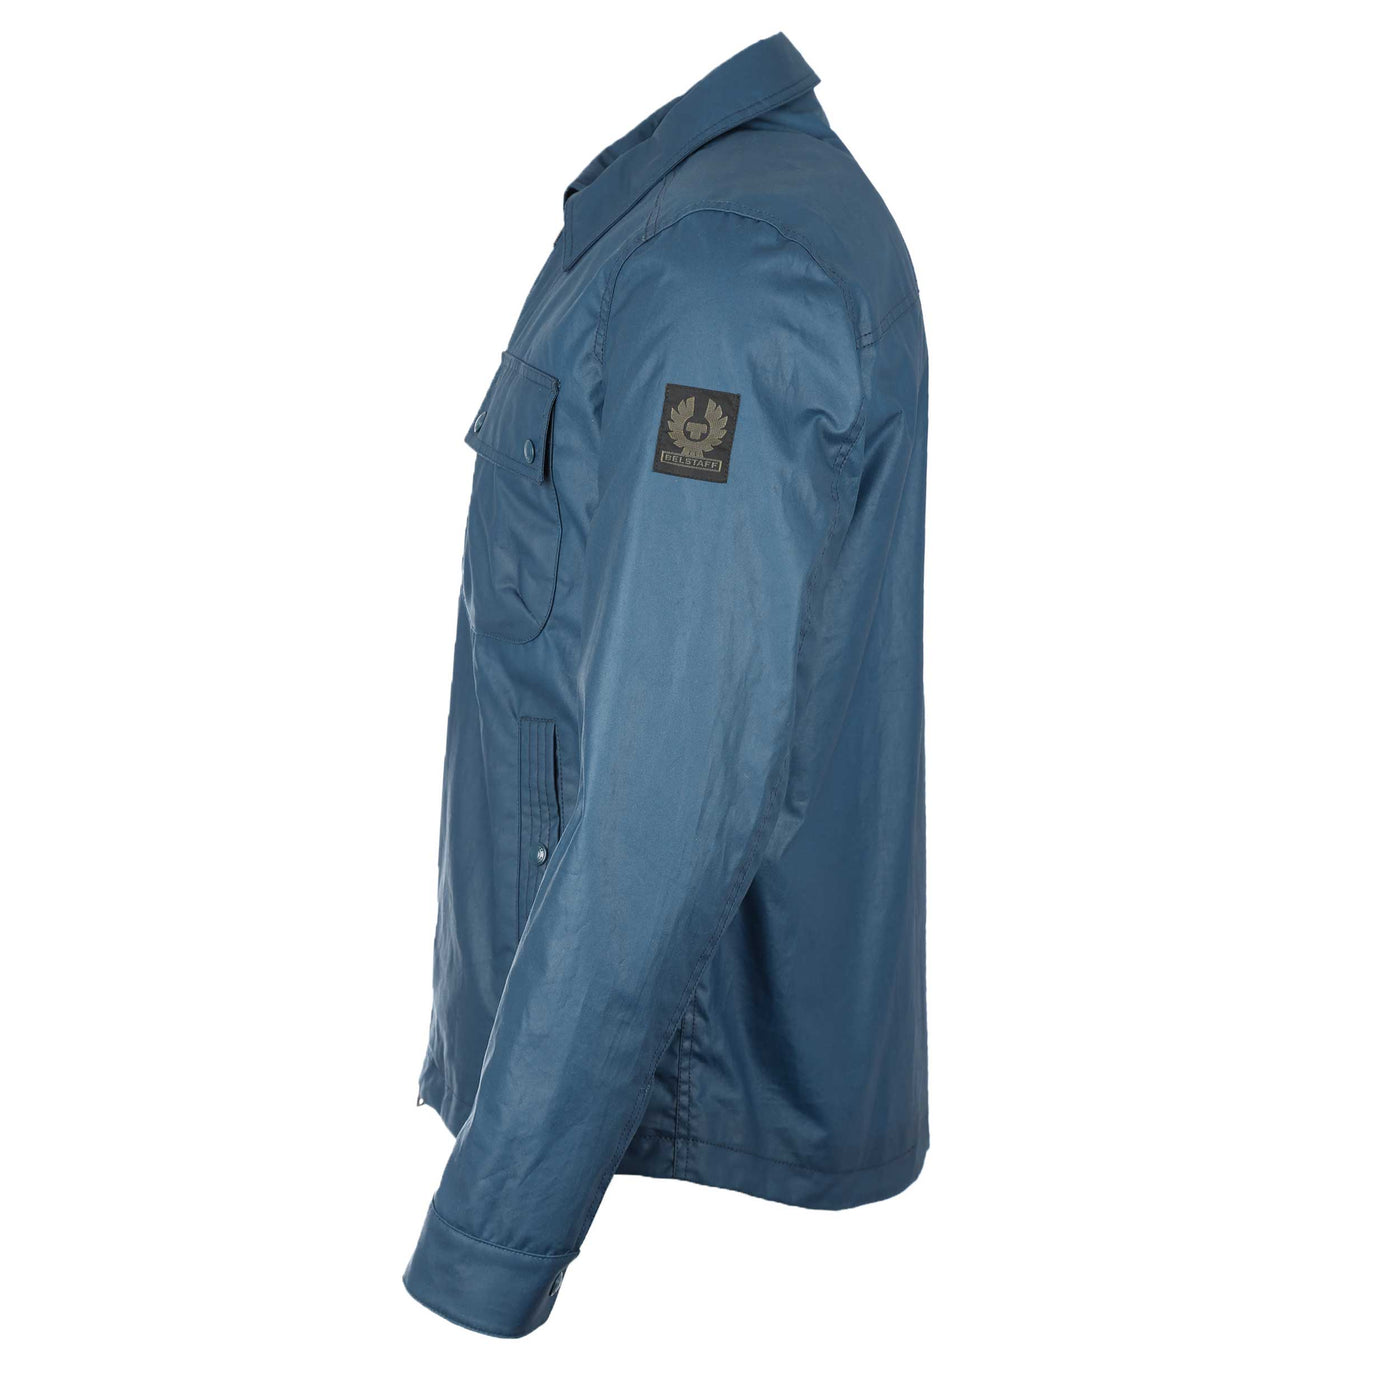 Belstaff Tonal Tour Overshirt Jacket in Legion Blue